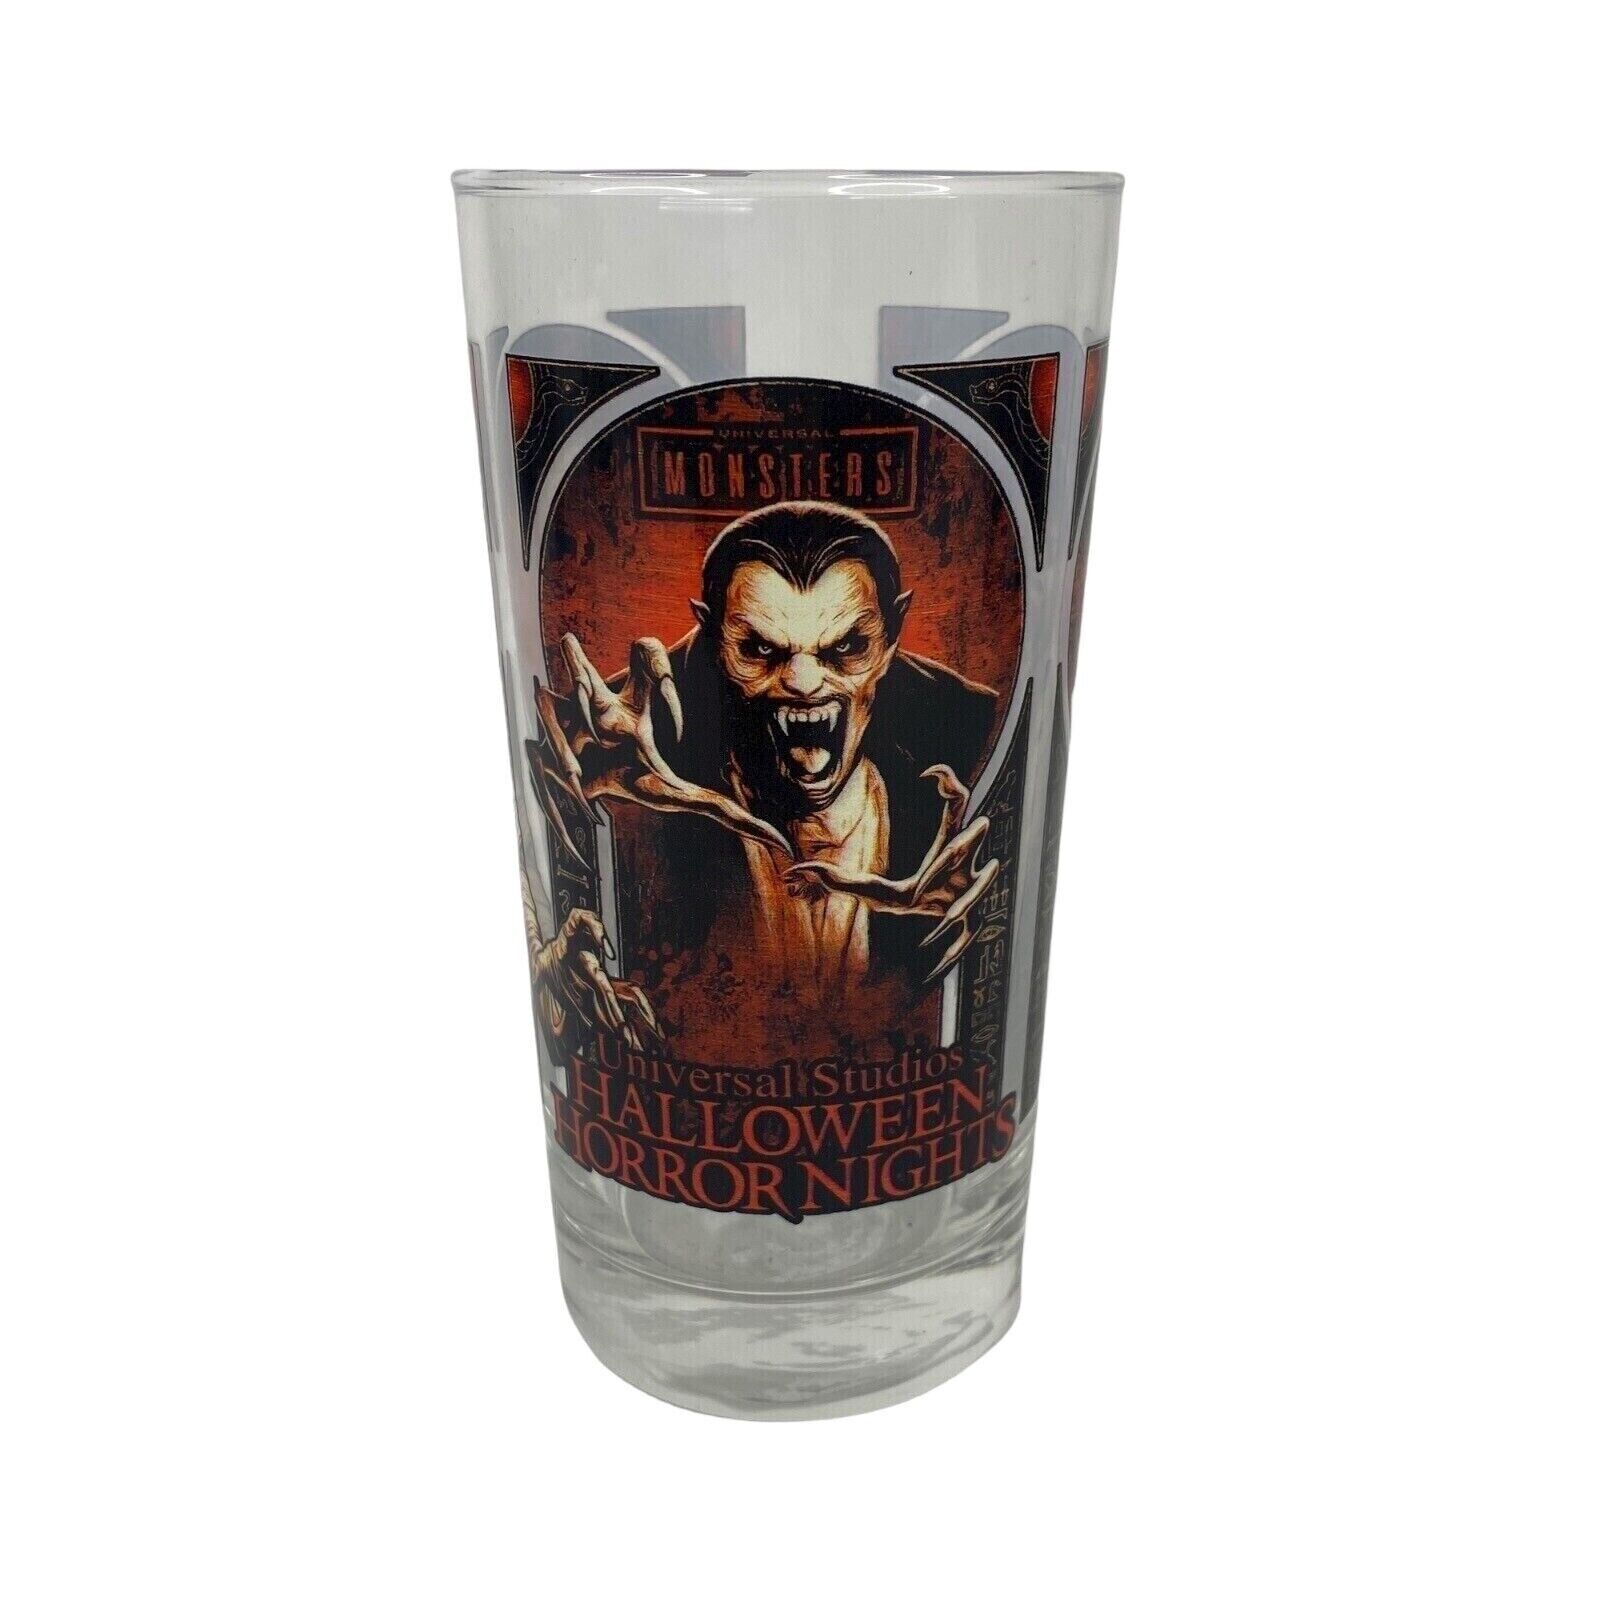 2022 Universal Studios Halloween Horror Nights Monsters Collectible Glass